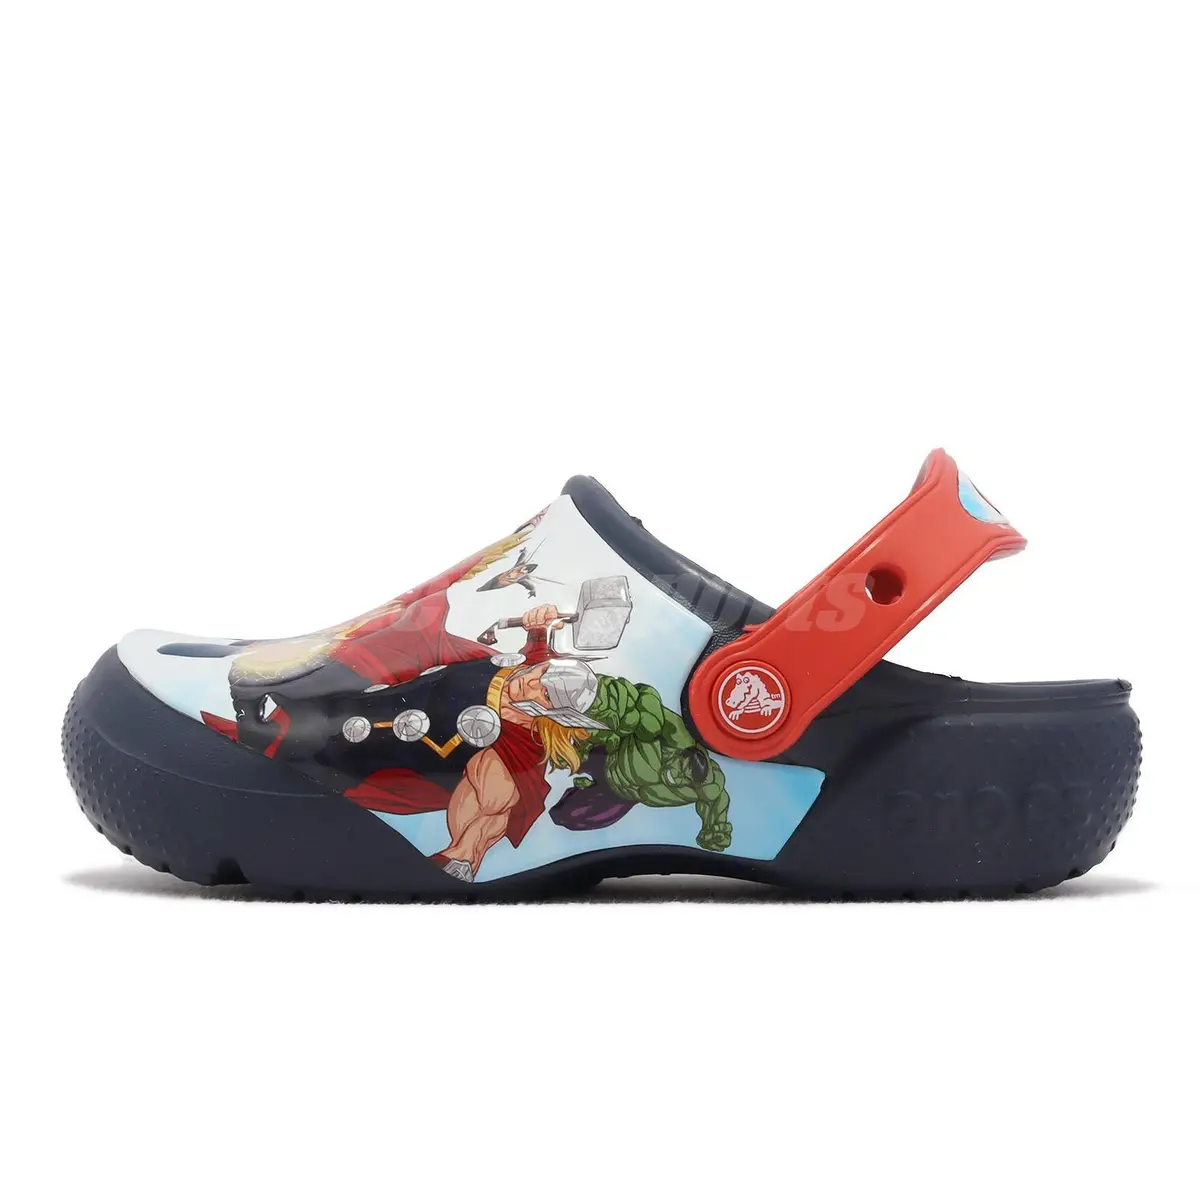 Sandals 207069-410 Avengers Shoes Lab Kids eBay Crocs K Patch | Fun Clog Navy Preschool